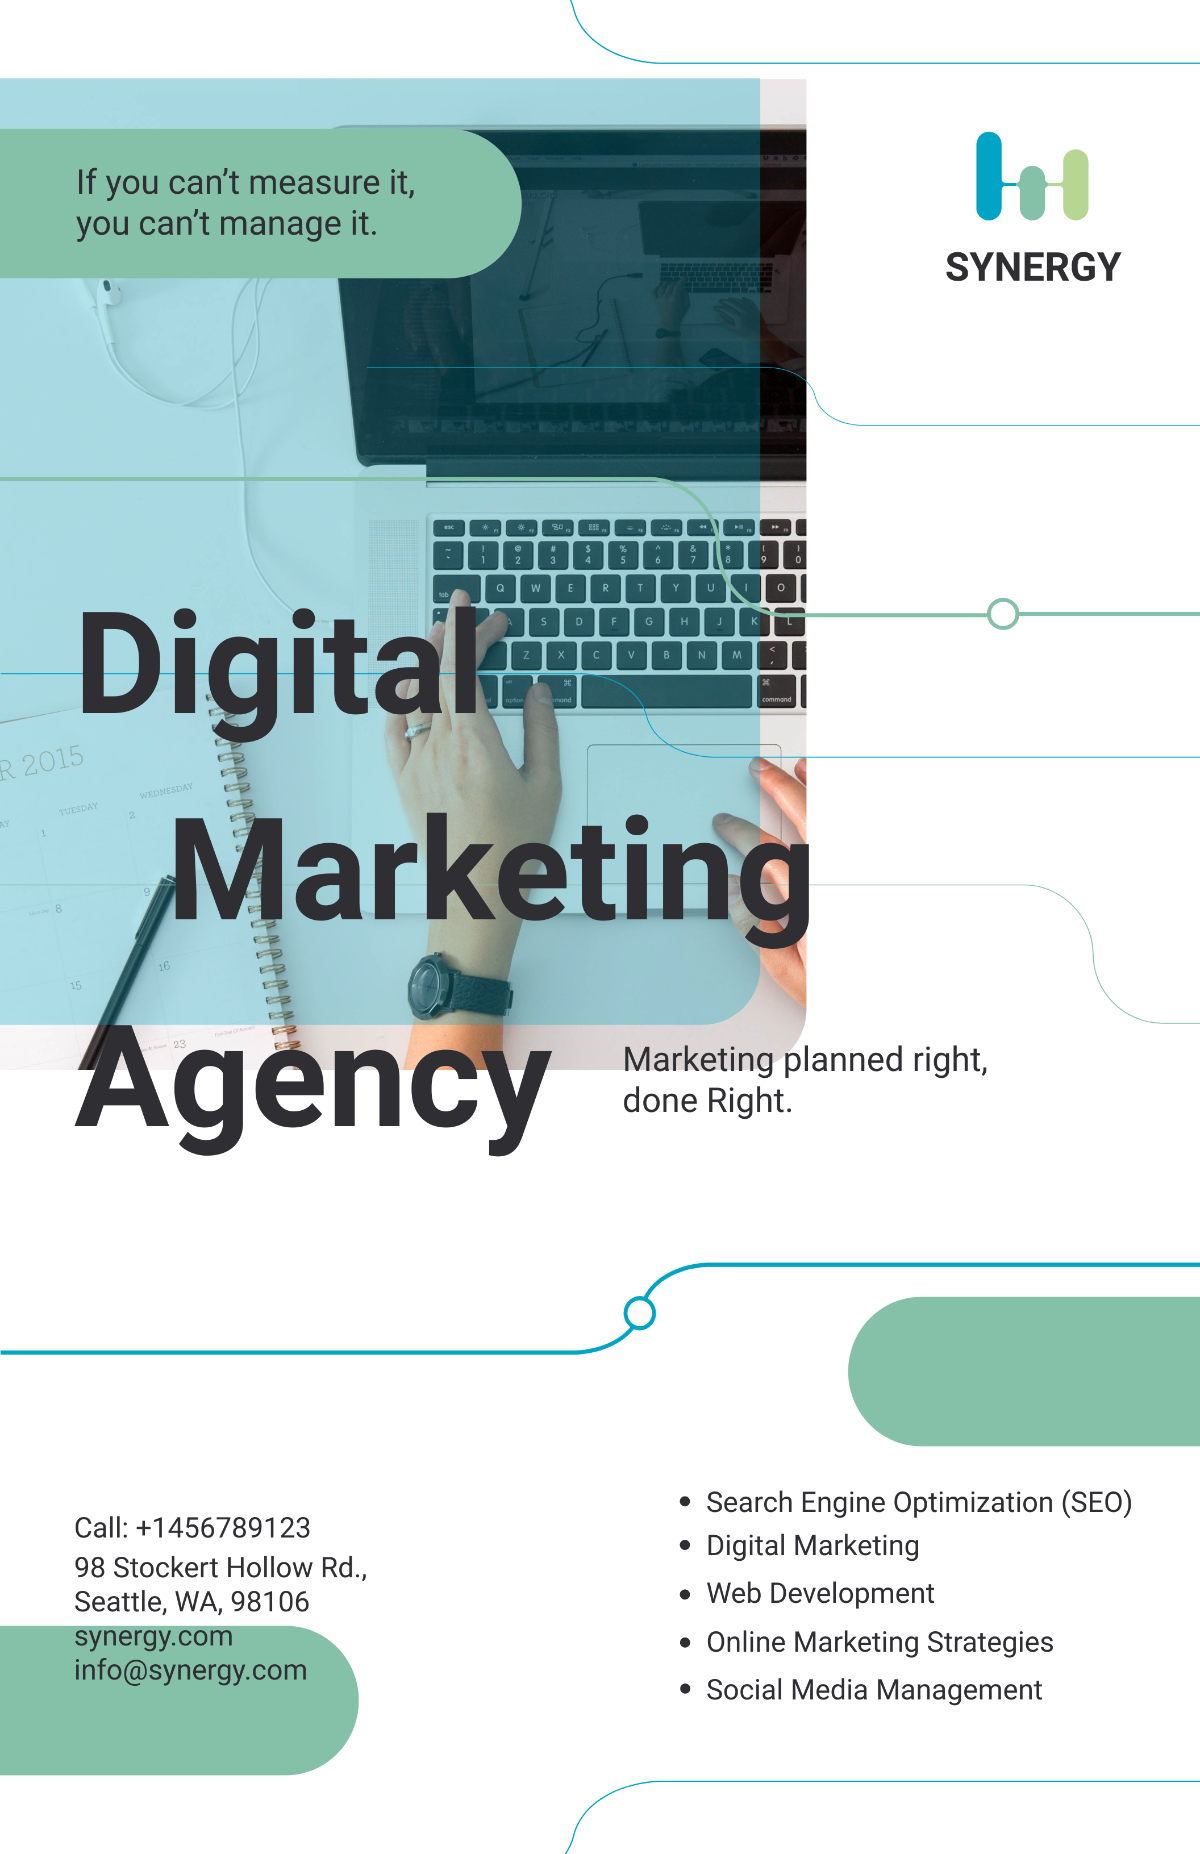 Digital Marketing Company Agency Poster Template